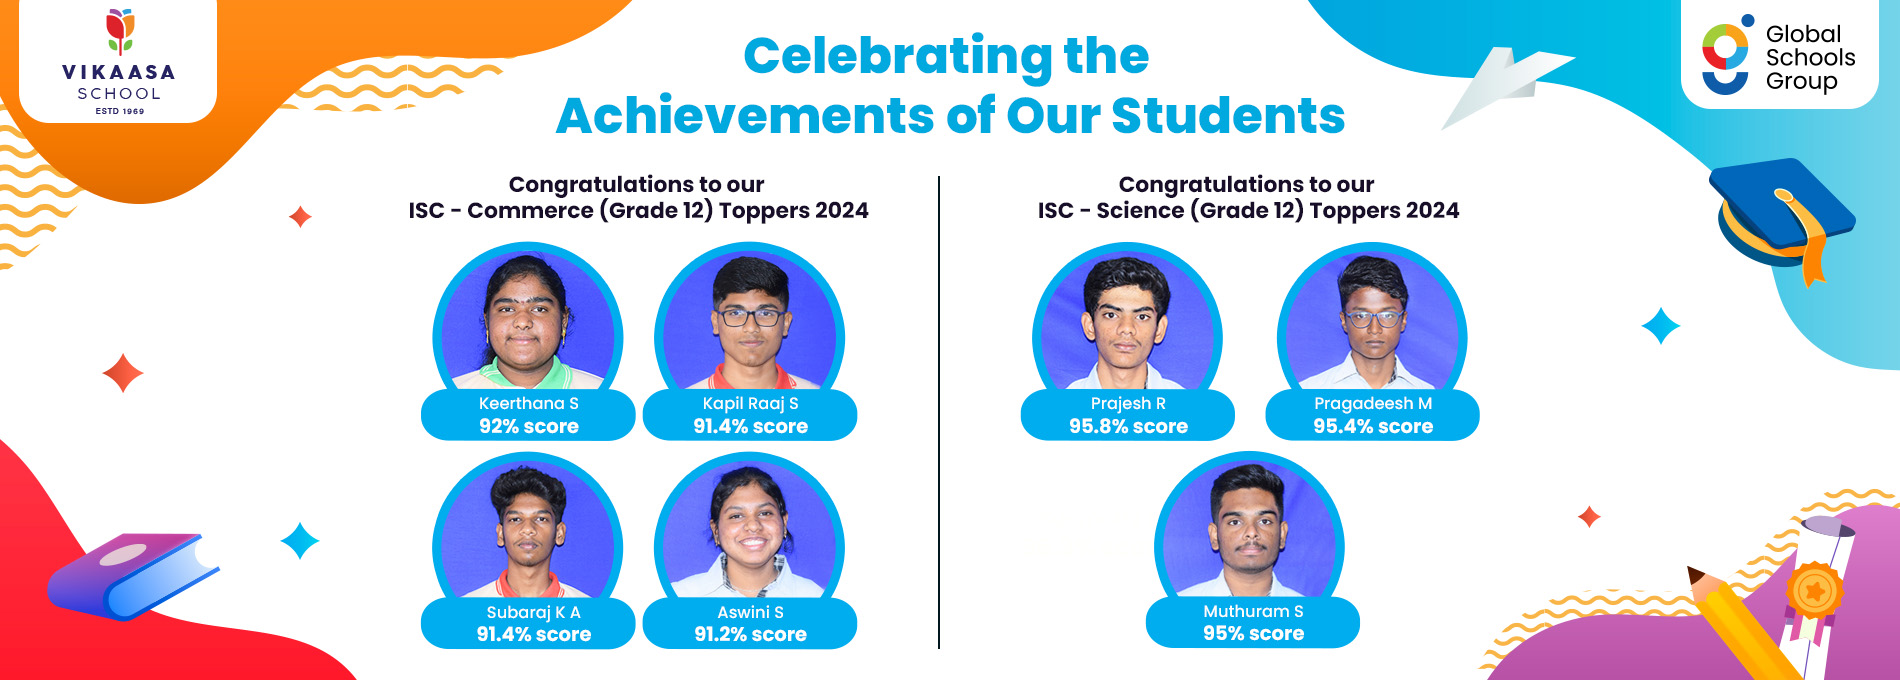 Celebrating the Achievements of Our Students | Schools in KK Nagar Madurai